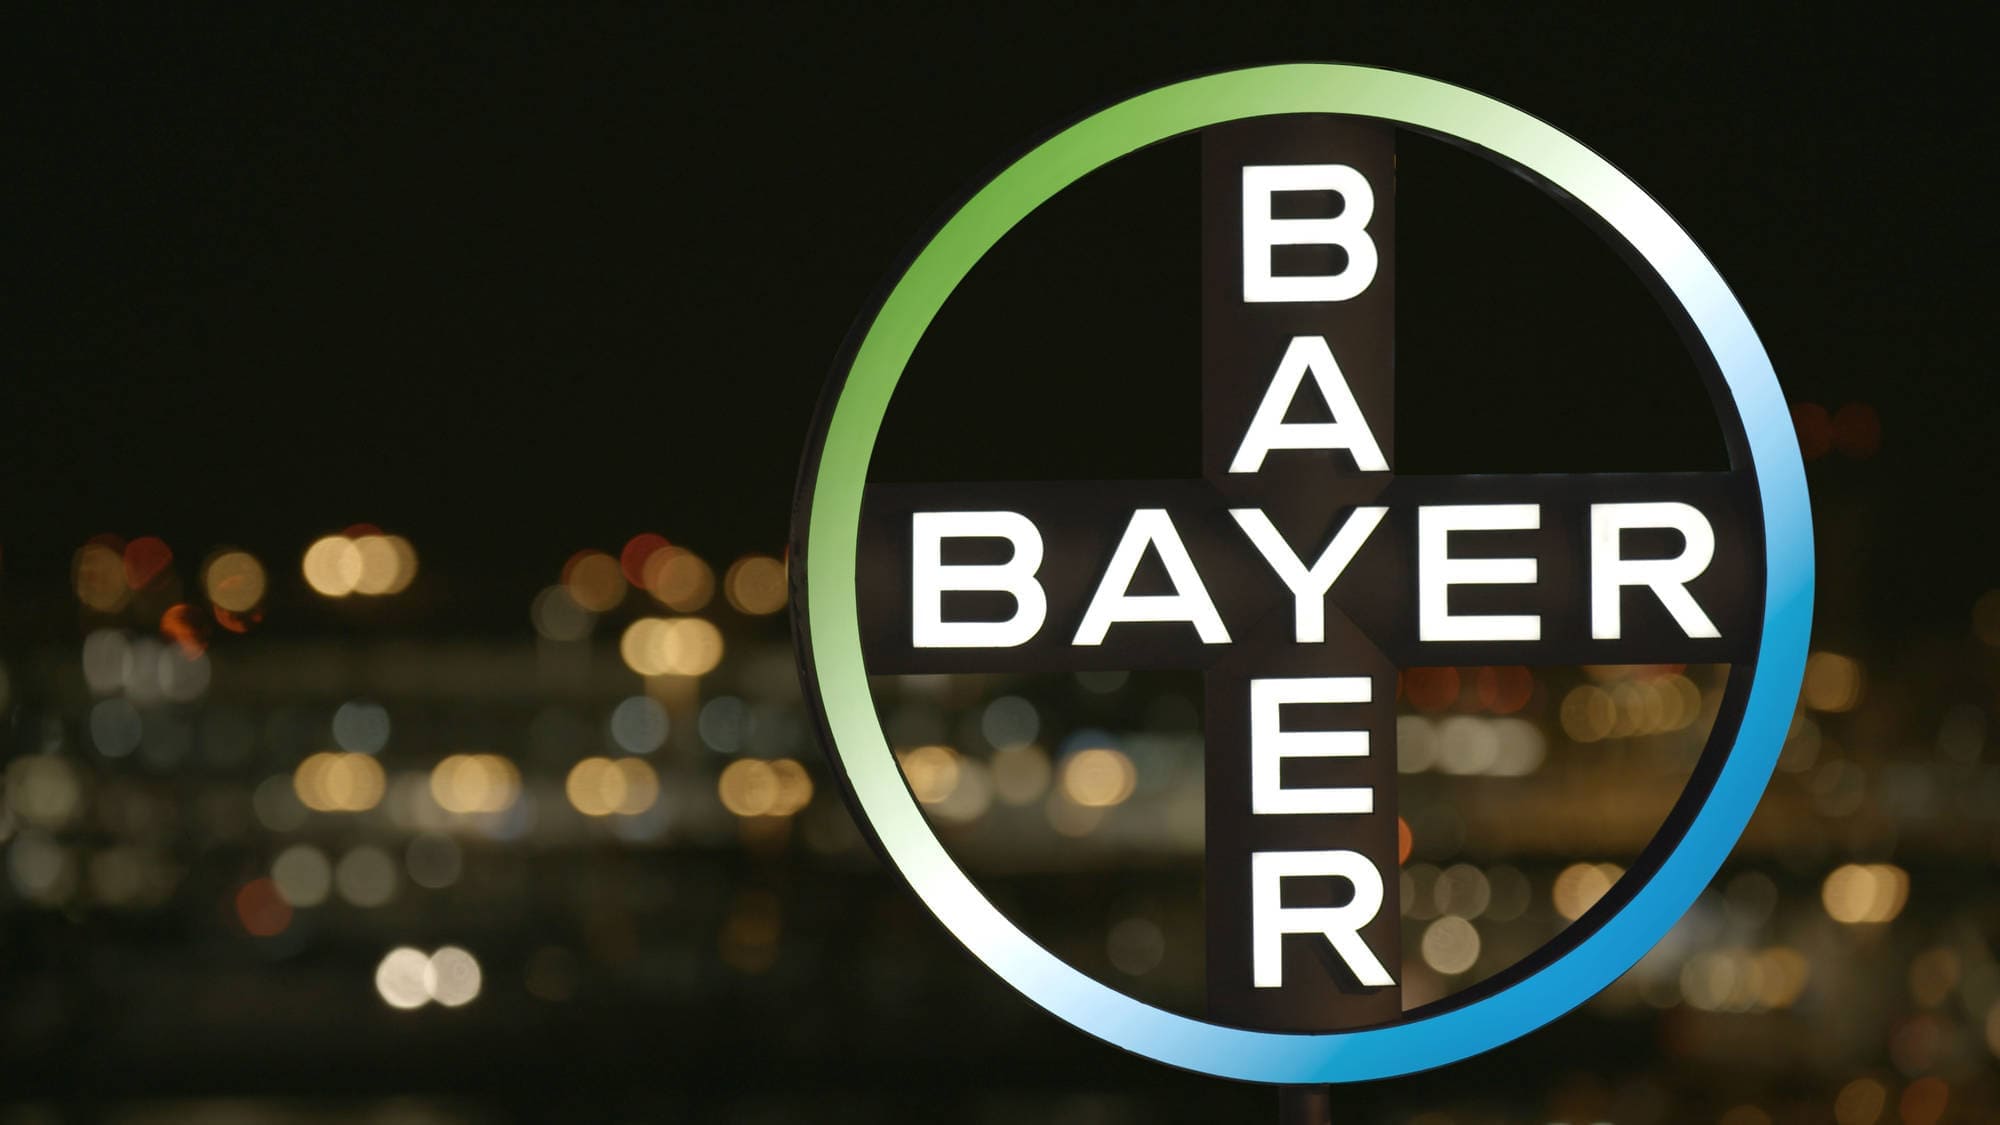 Bayer Bioscience